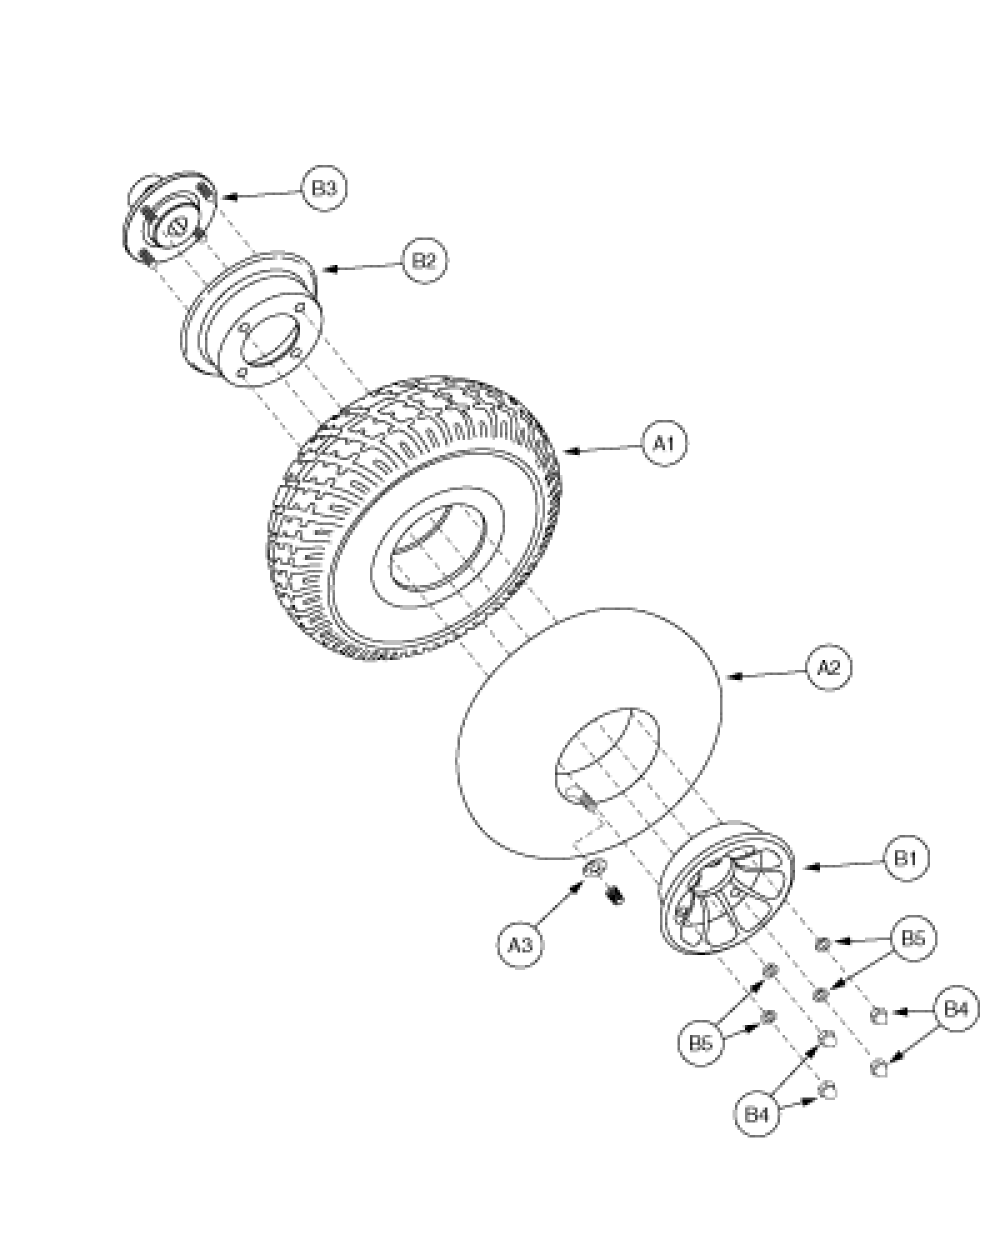 Drive Wheel Assembly - Pneumatic parts diagram